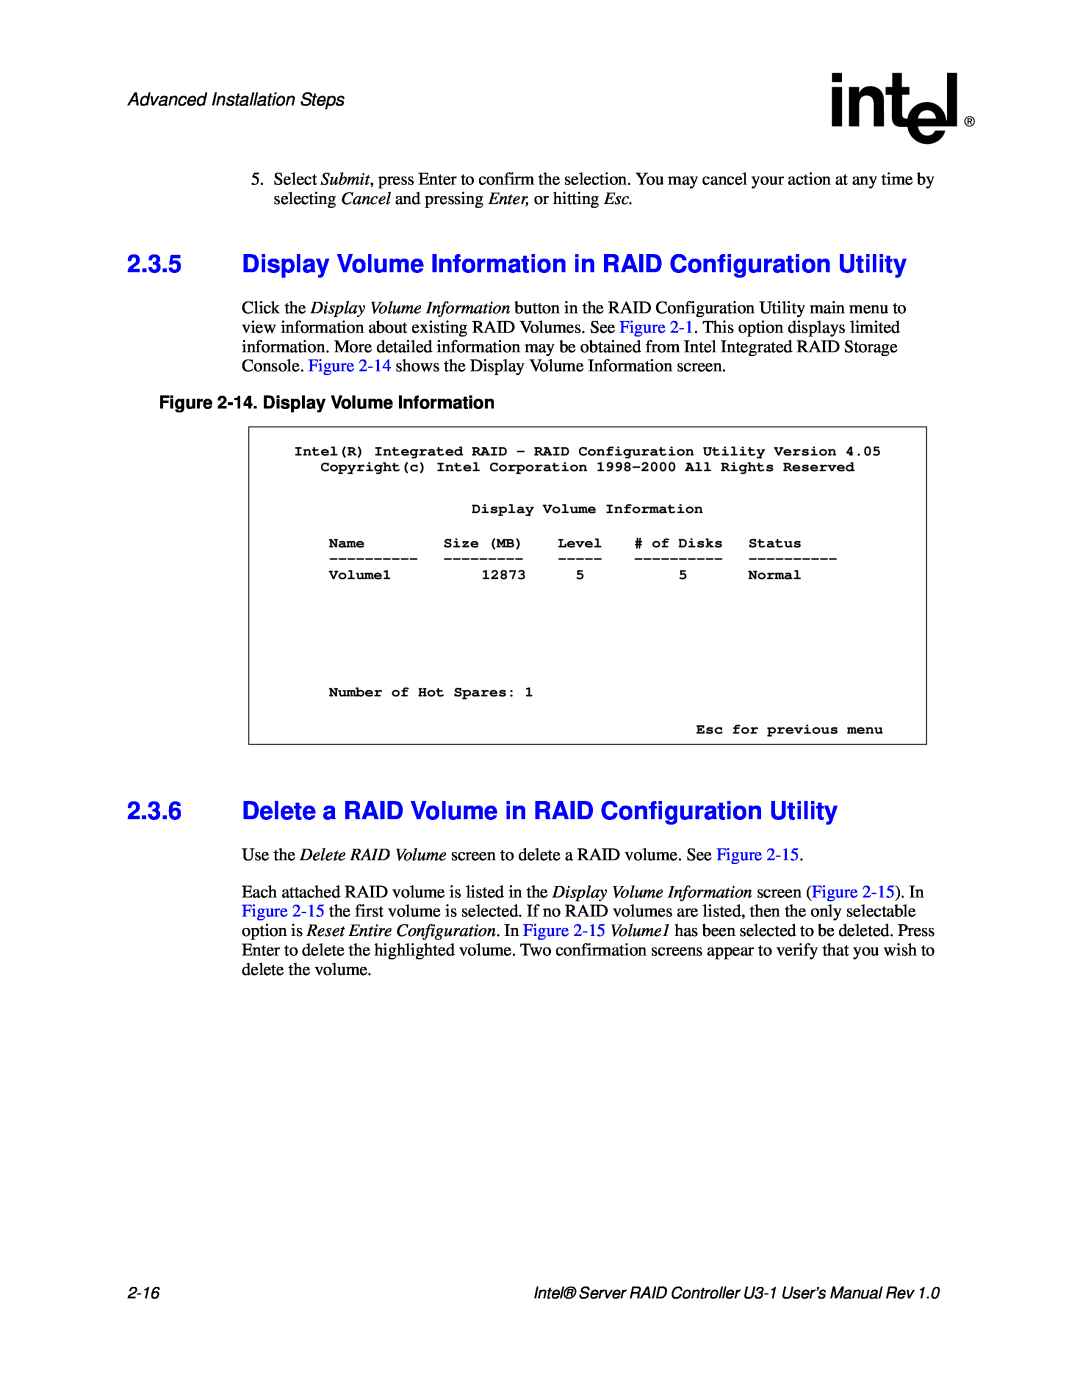 Intel SRCU31 user manual 14.Display Volume Information 